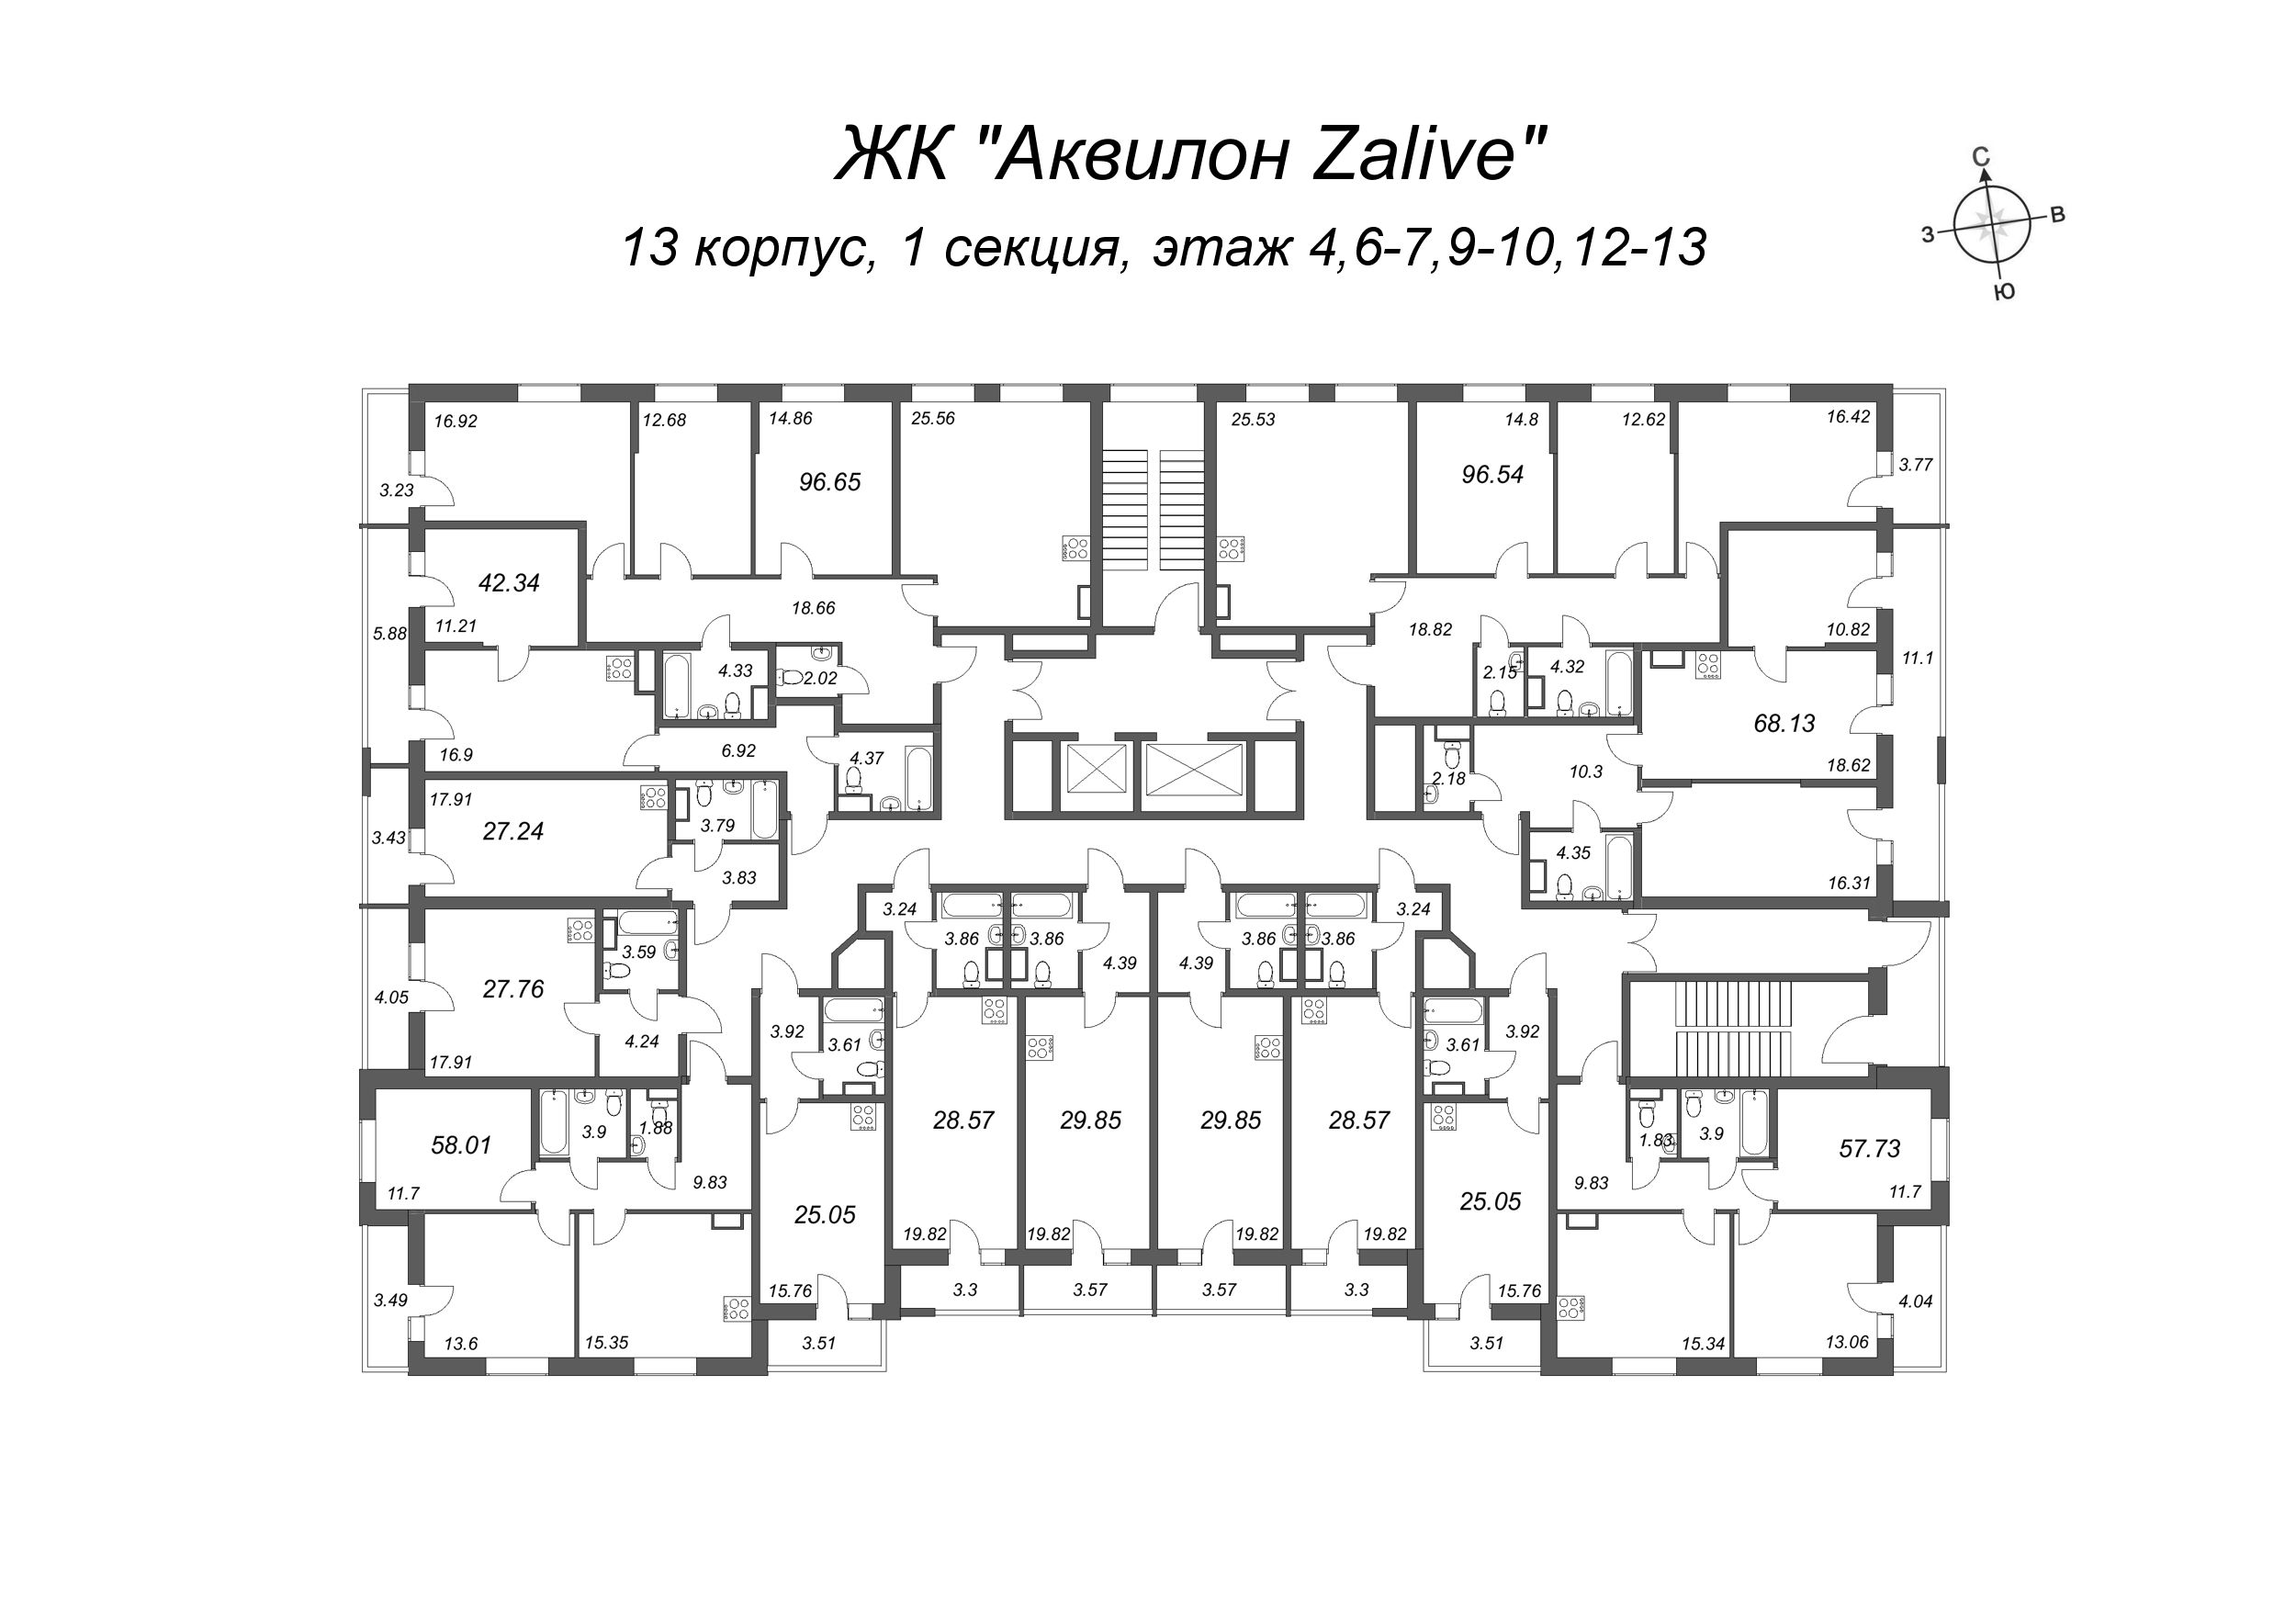 3-комнатная (Евро) квартира, 58.01 м² - планировка этажа